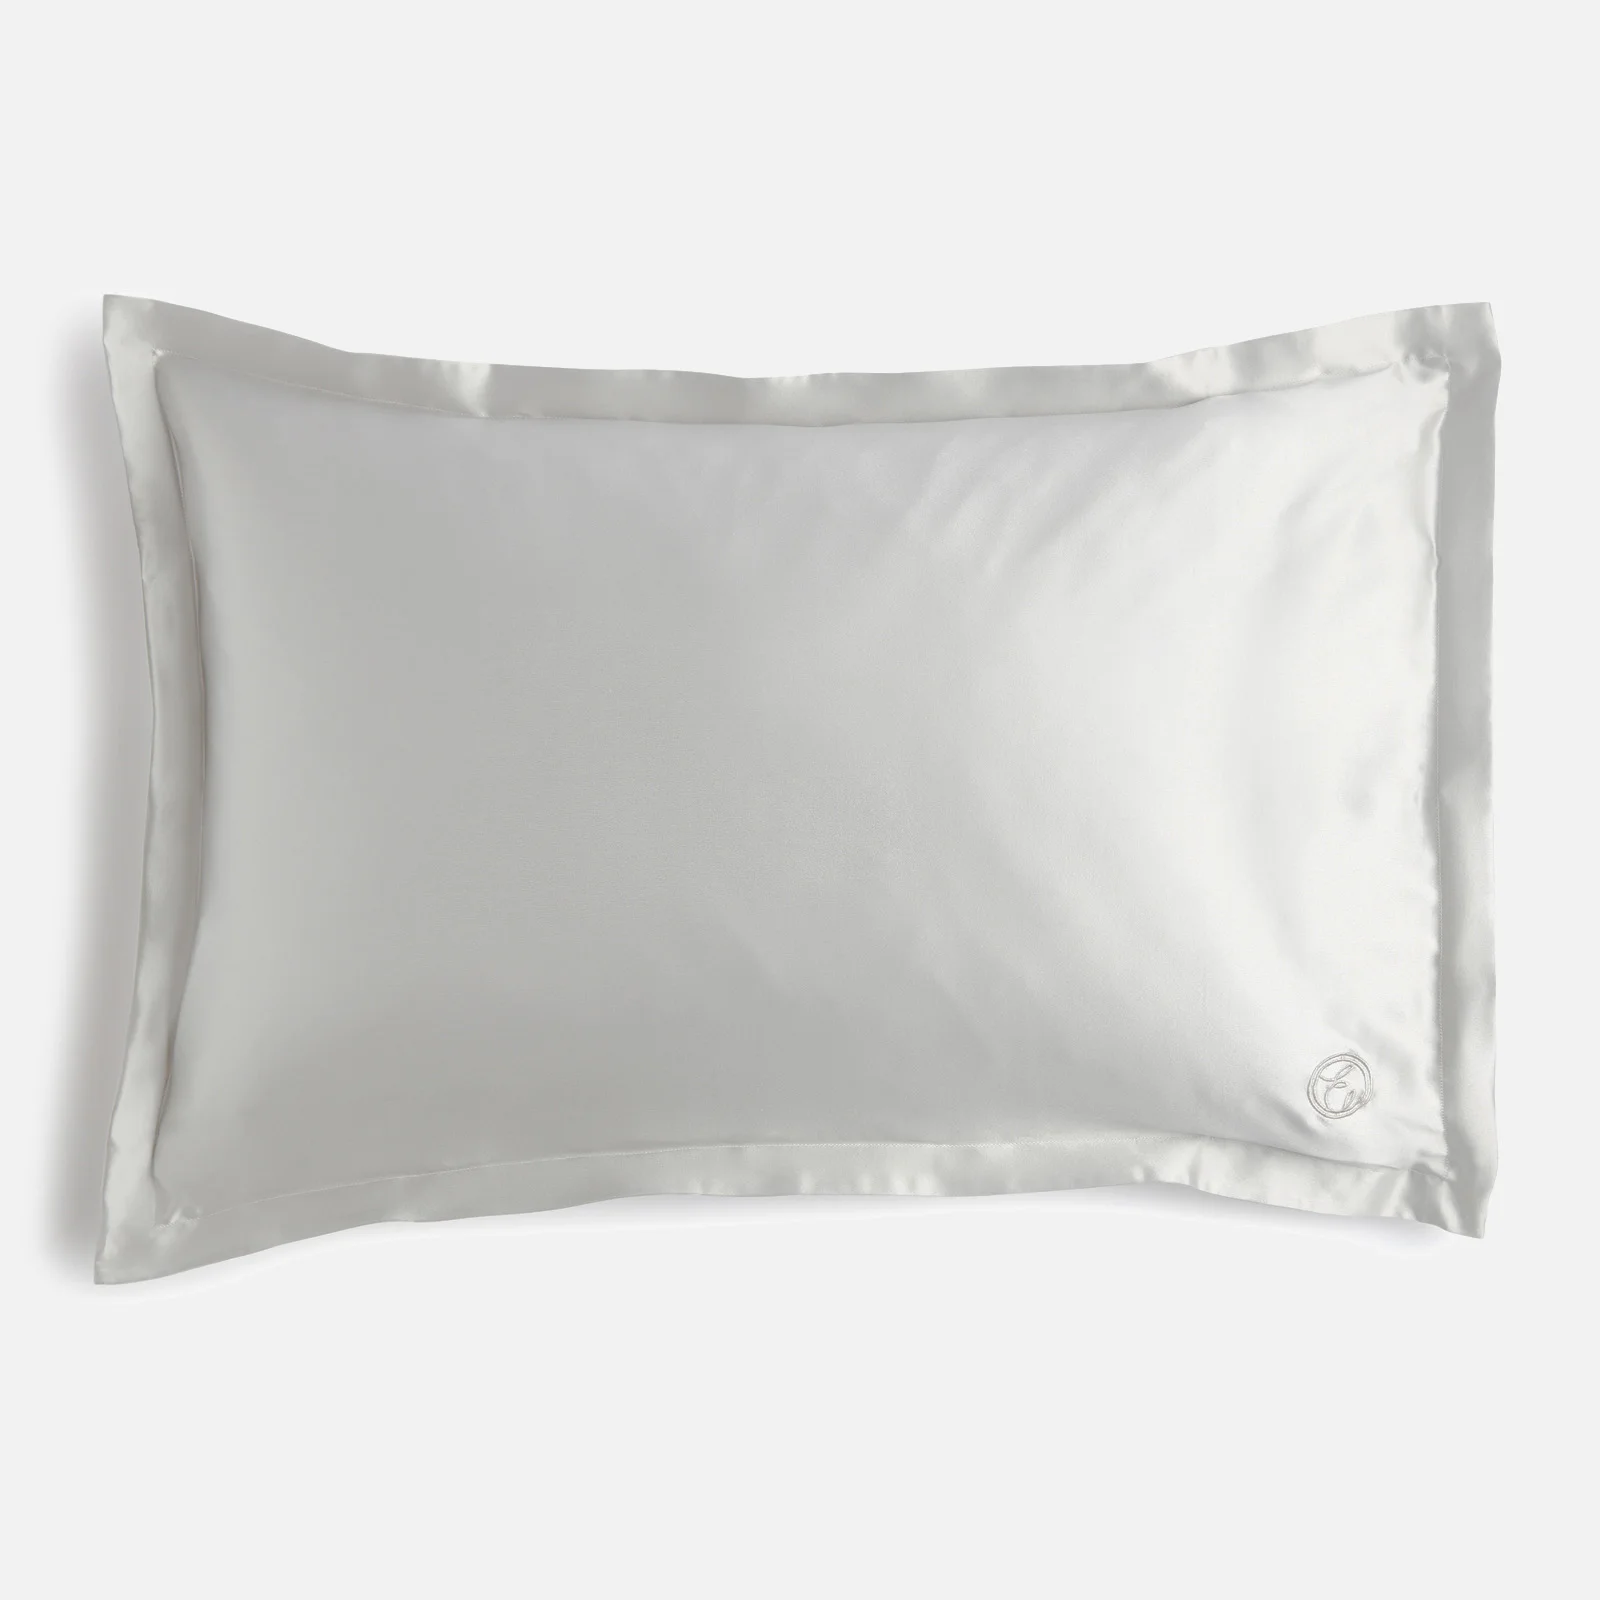 ESPA Home Oxford Edge Silk Pillowcase - Moonlight Grey Image 1